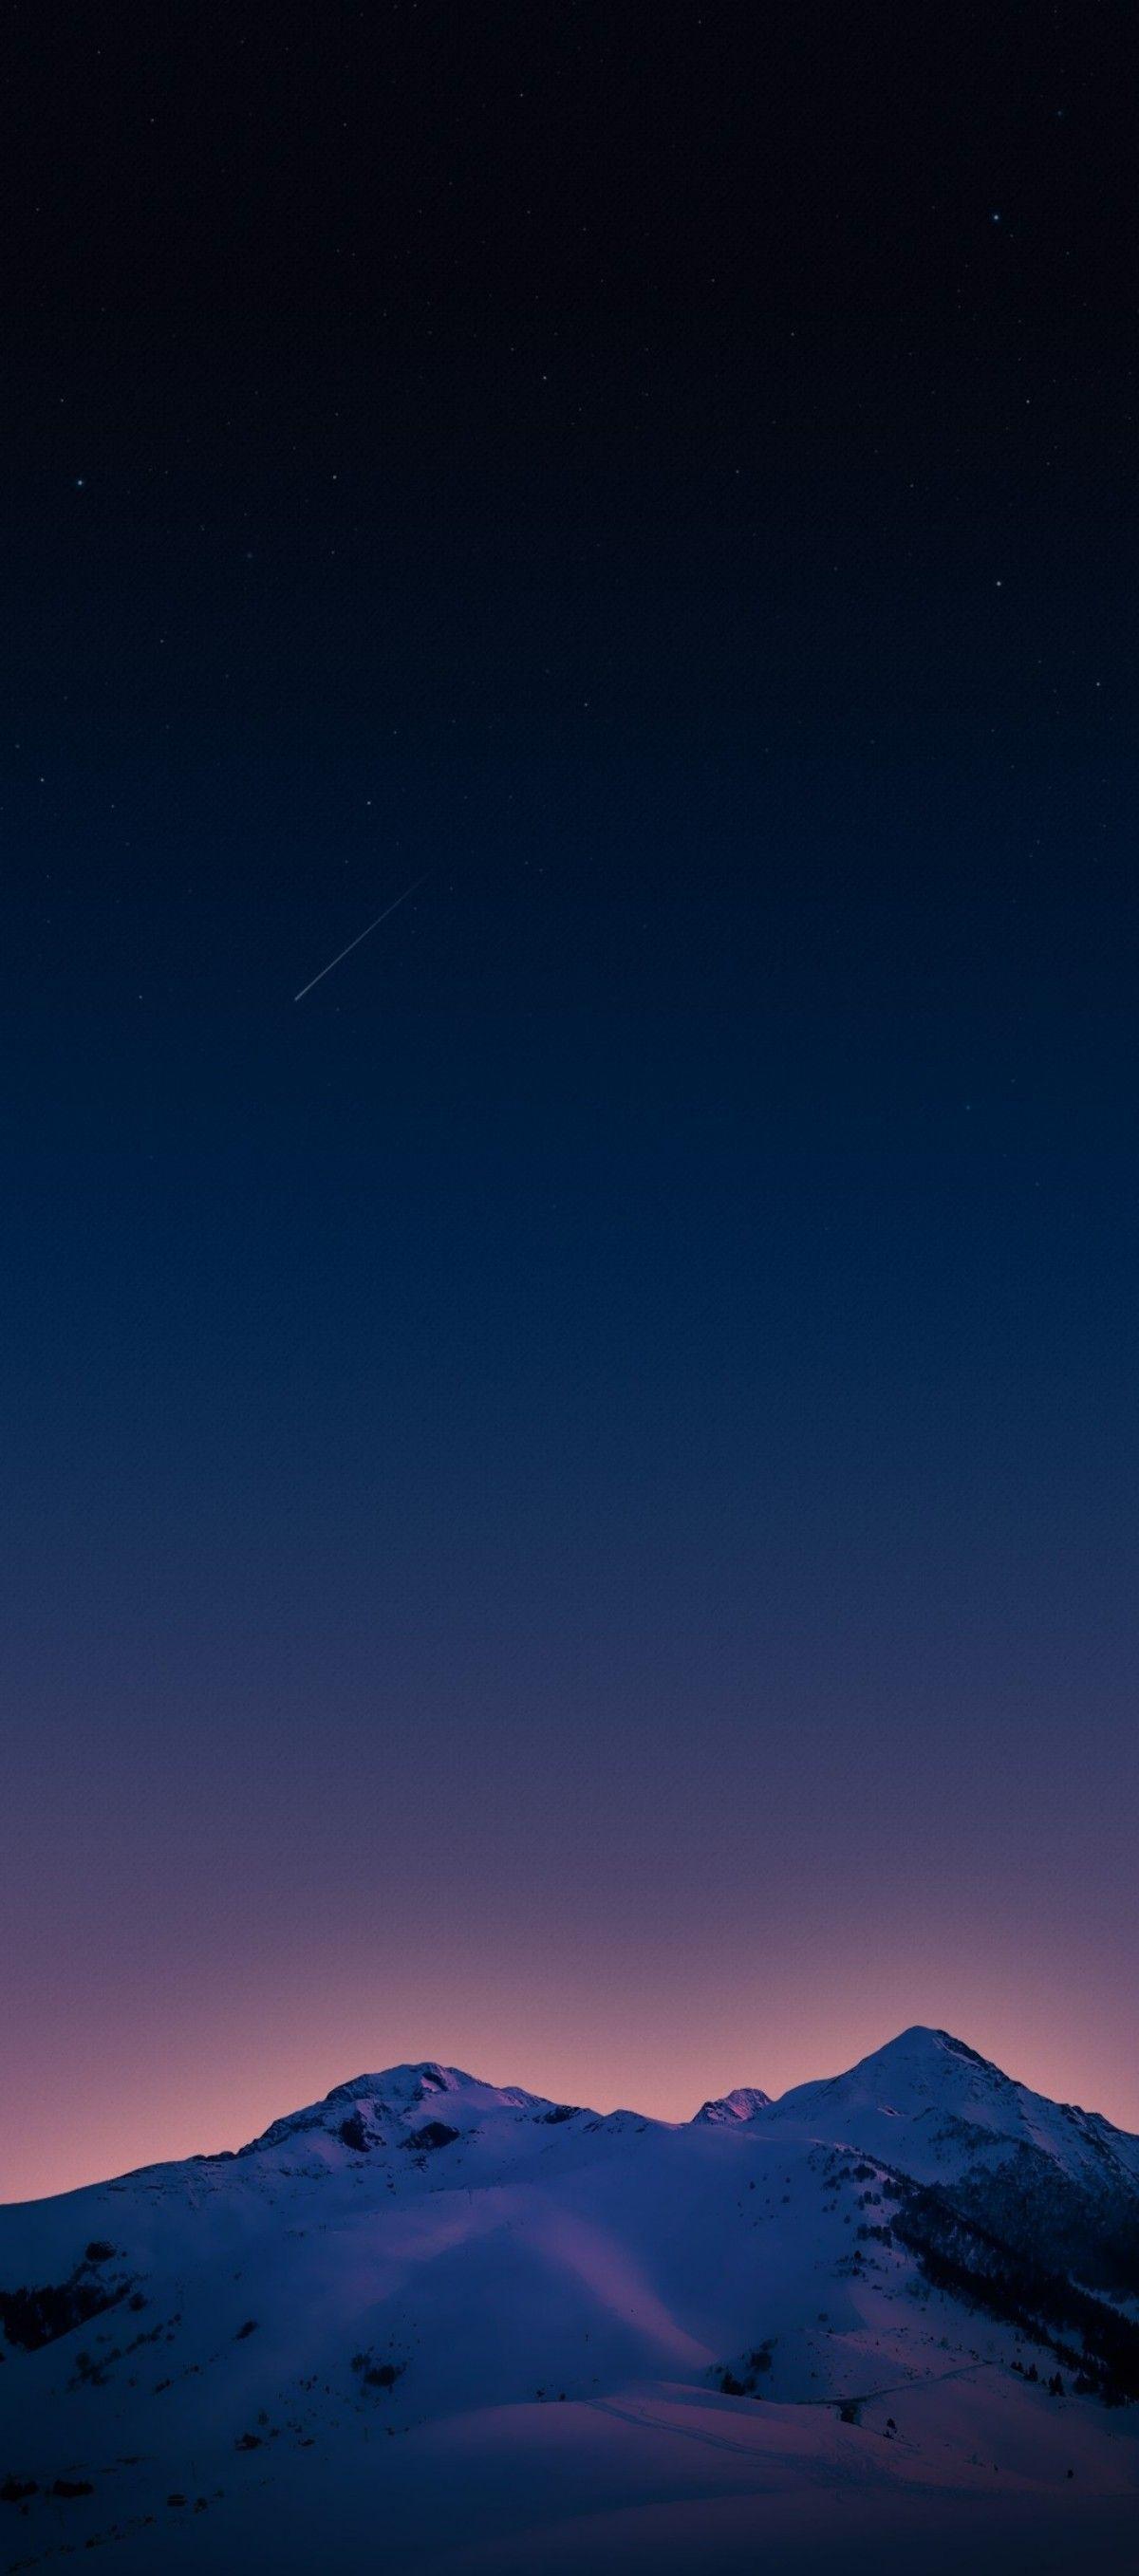 iPhone x, iPhone ios, Pixel 2 xl, mountain, sunset, purple